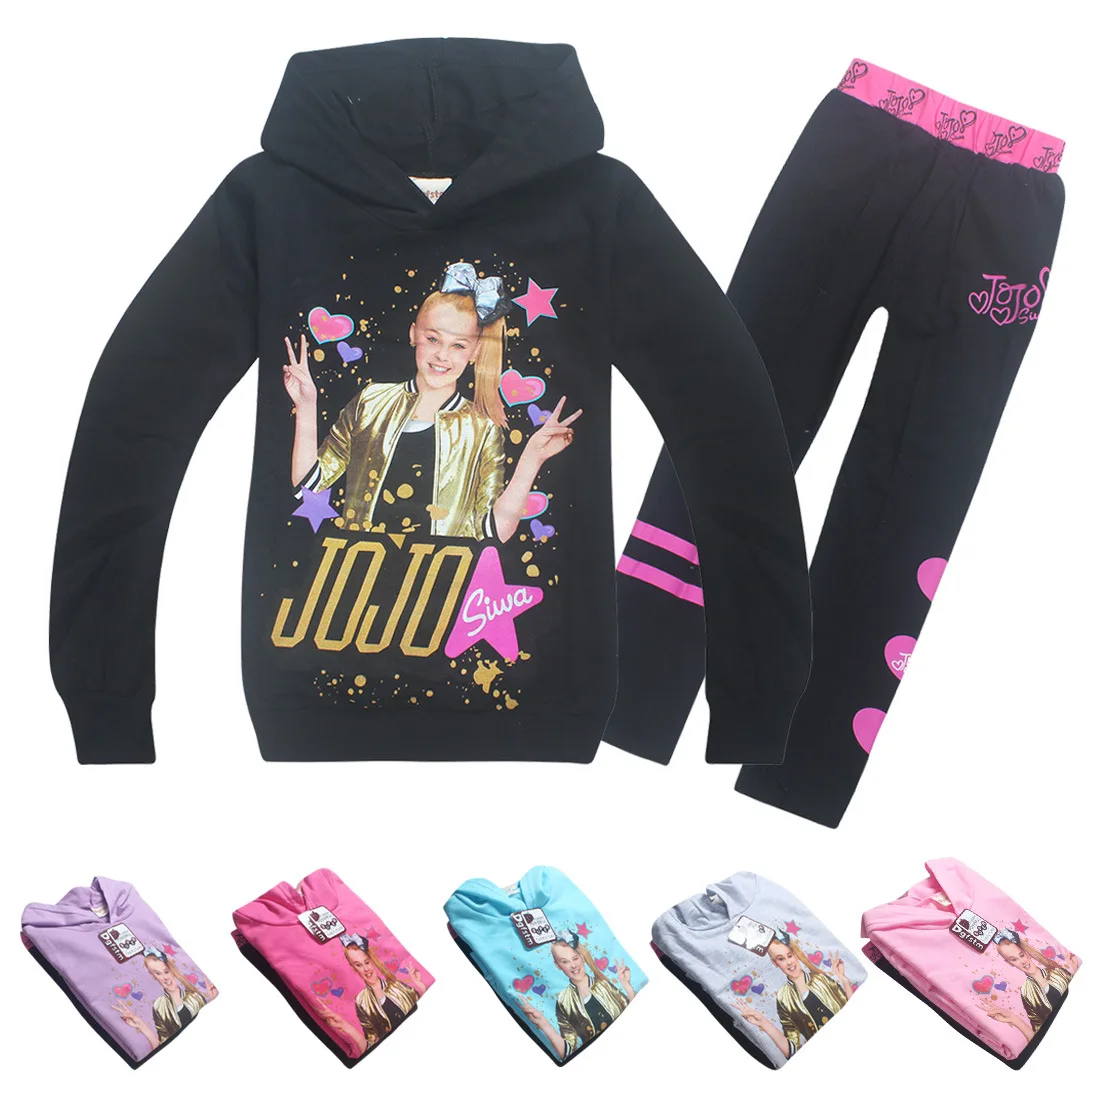 Moana spring girl sports suit brand clothing fashion hoodie T-shirt + pants 2 piece suit jo jo siwa